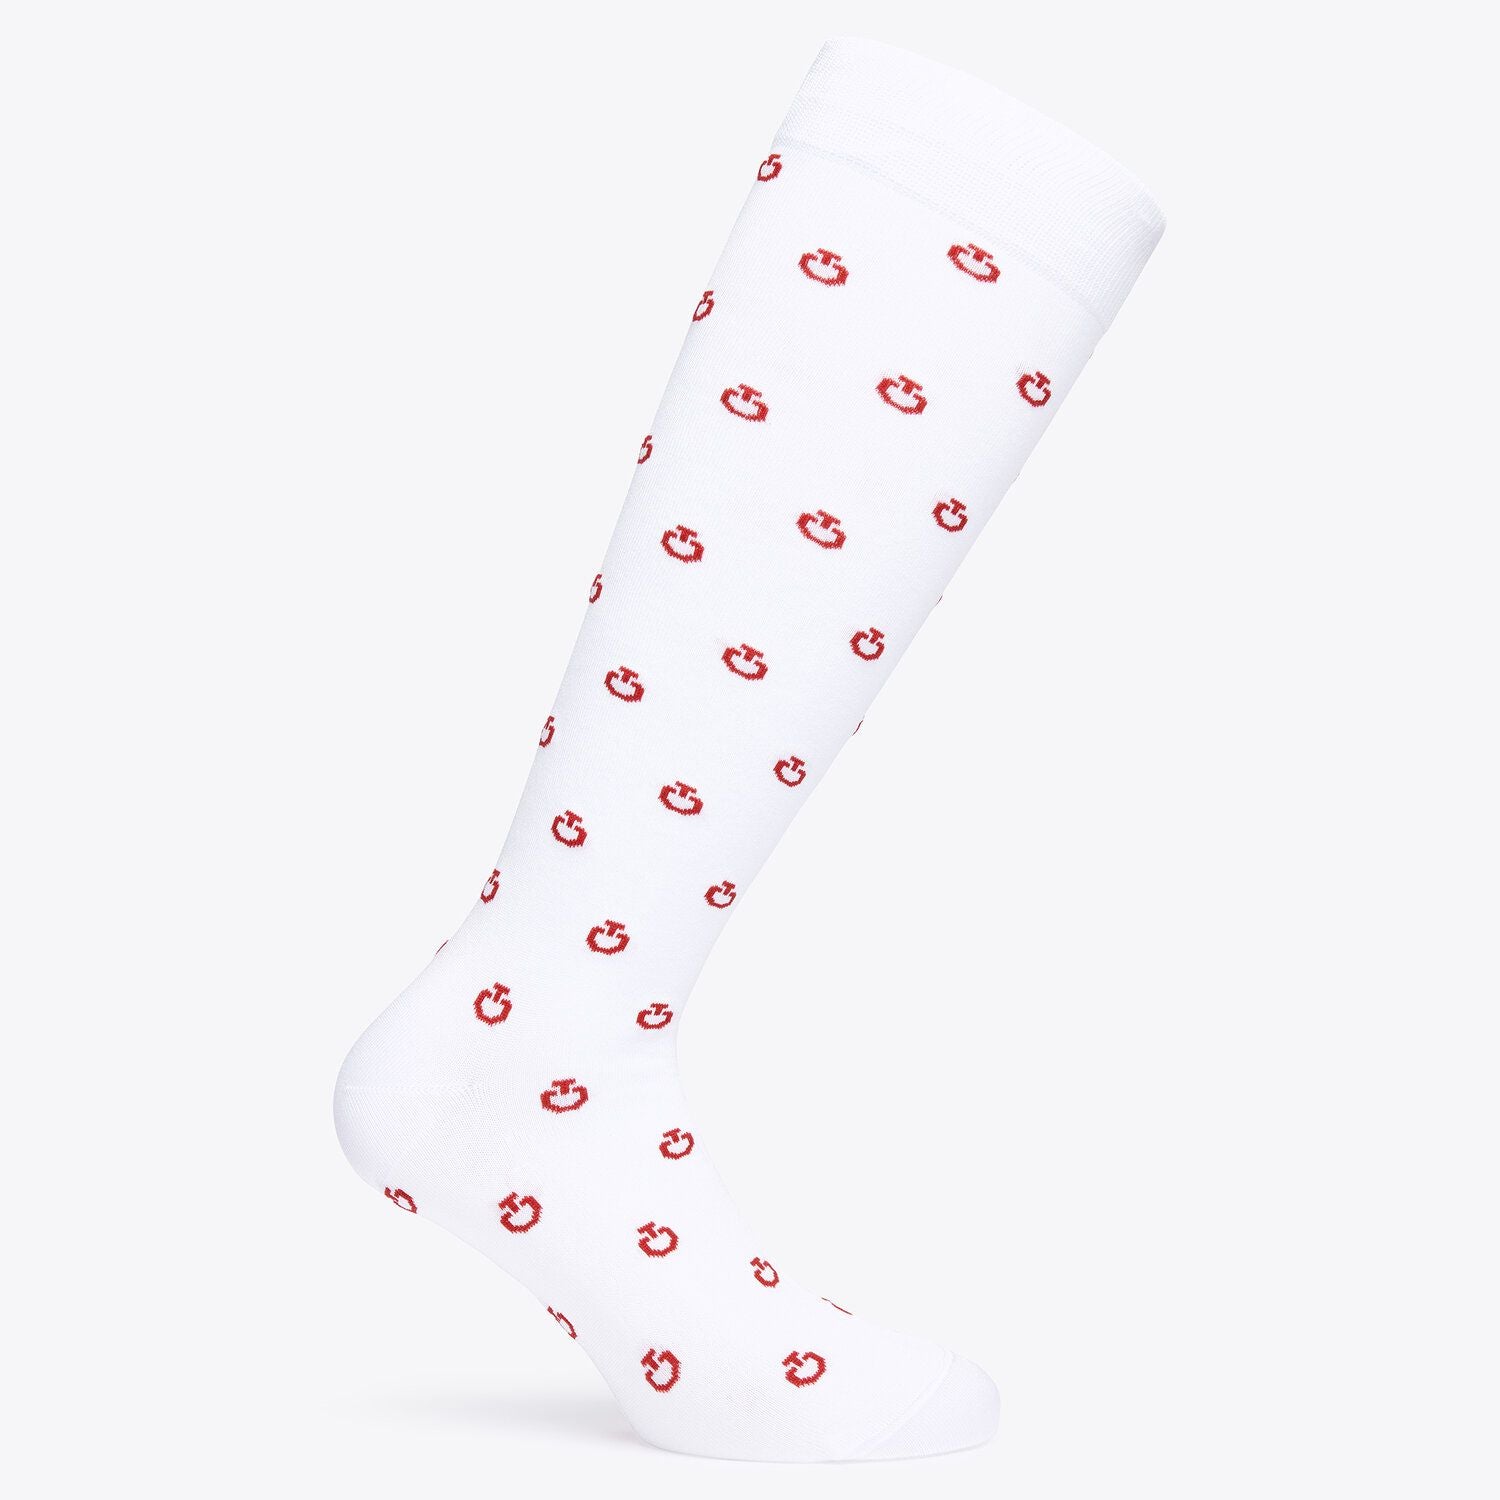 Cavalleria Toscana set of 3 socks with mini logos